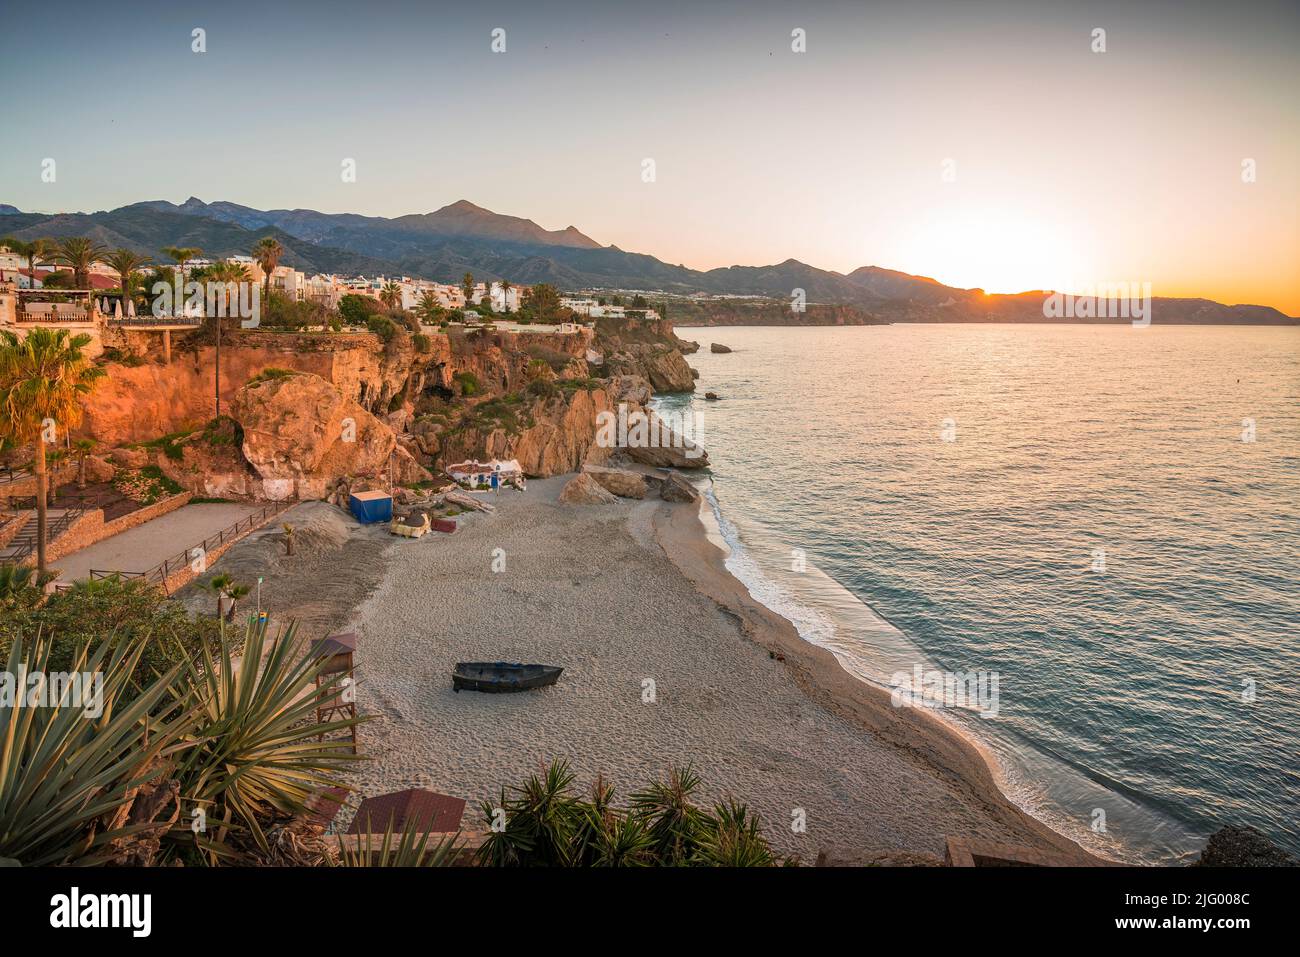 View of Playa de Calahonda beach and coastline at sunrise in Nerja, Costa del Sol, Malaga Province, Andalusia, Spain, Mediterranean, Europe Stock Photo